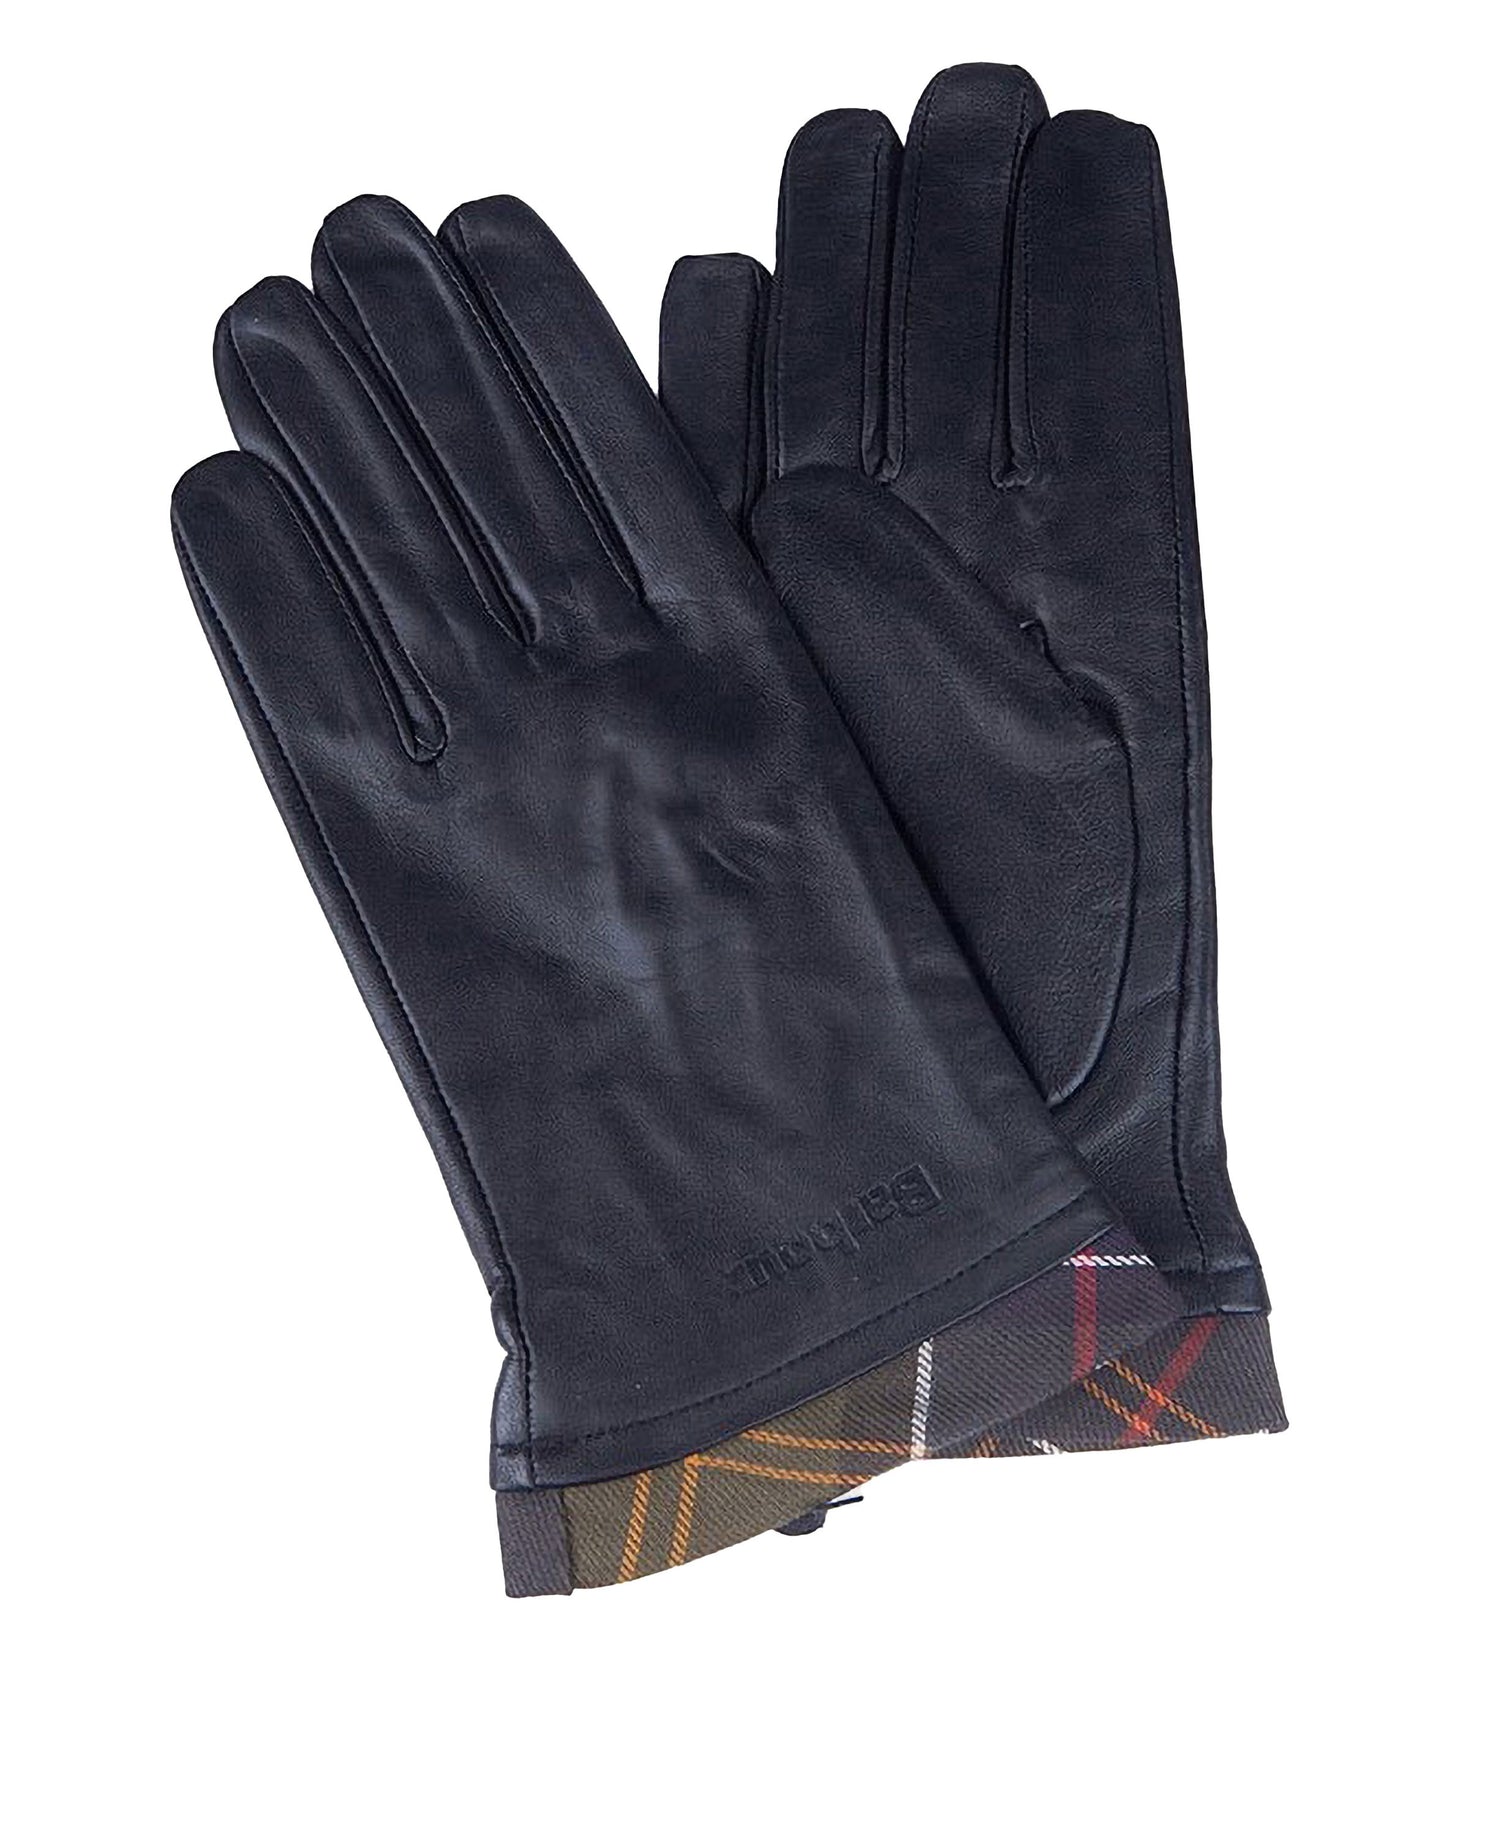 Tartan Trimmed Leather Gloves - Black/Classic